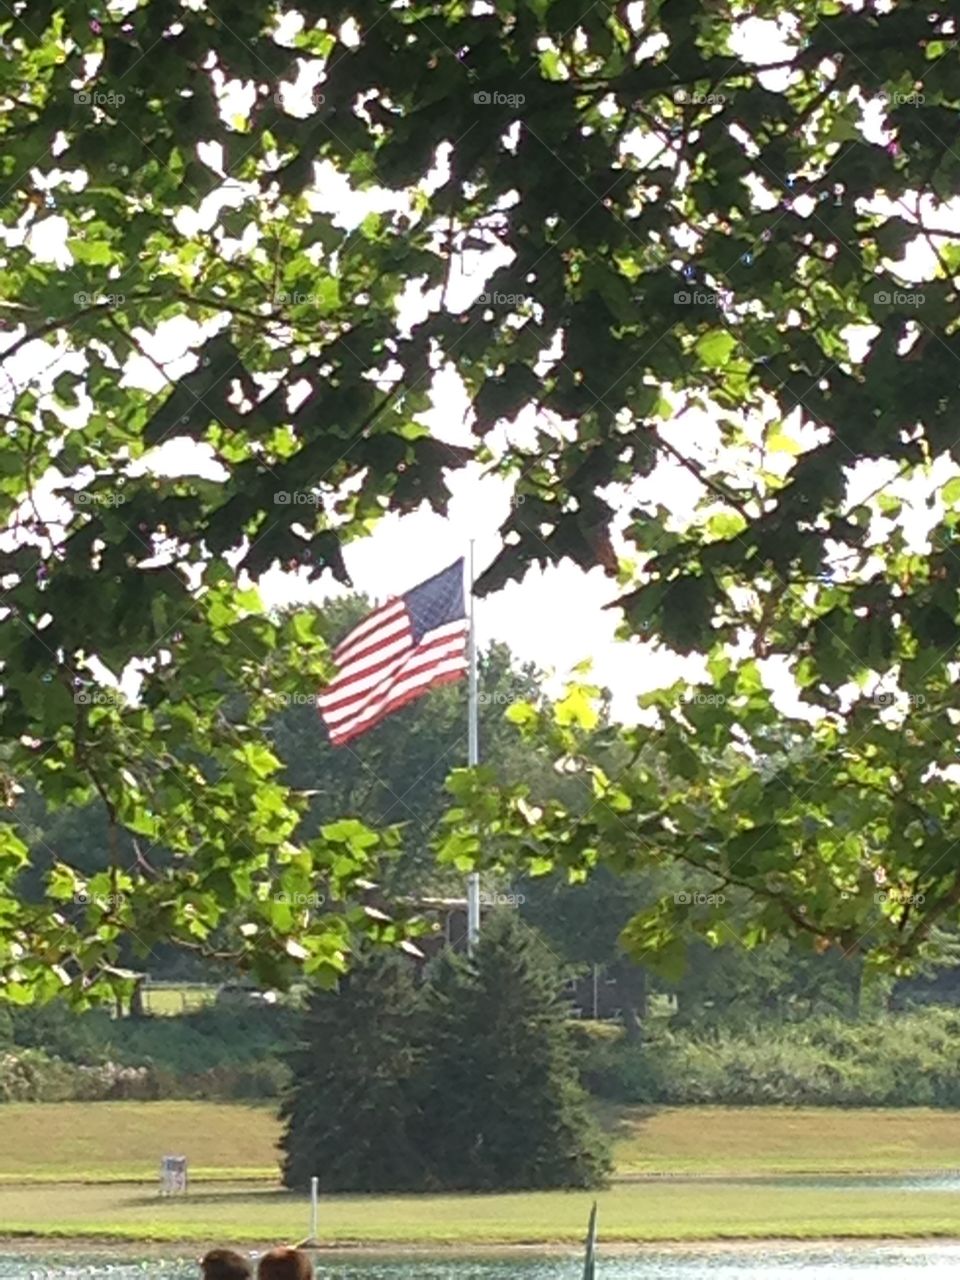 Our flag through the trees